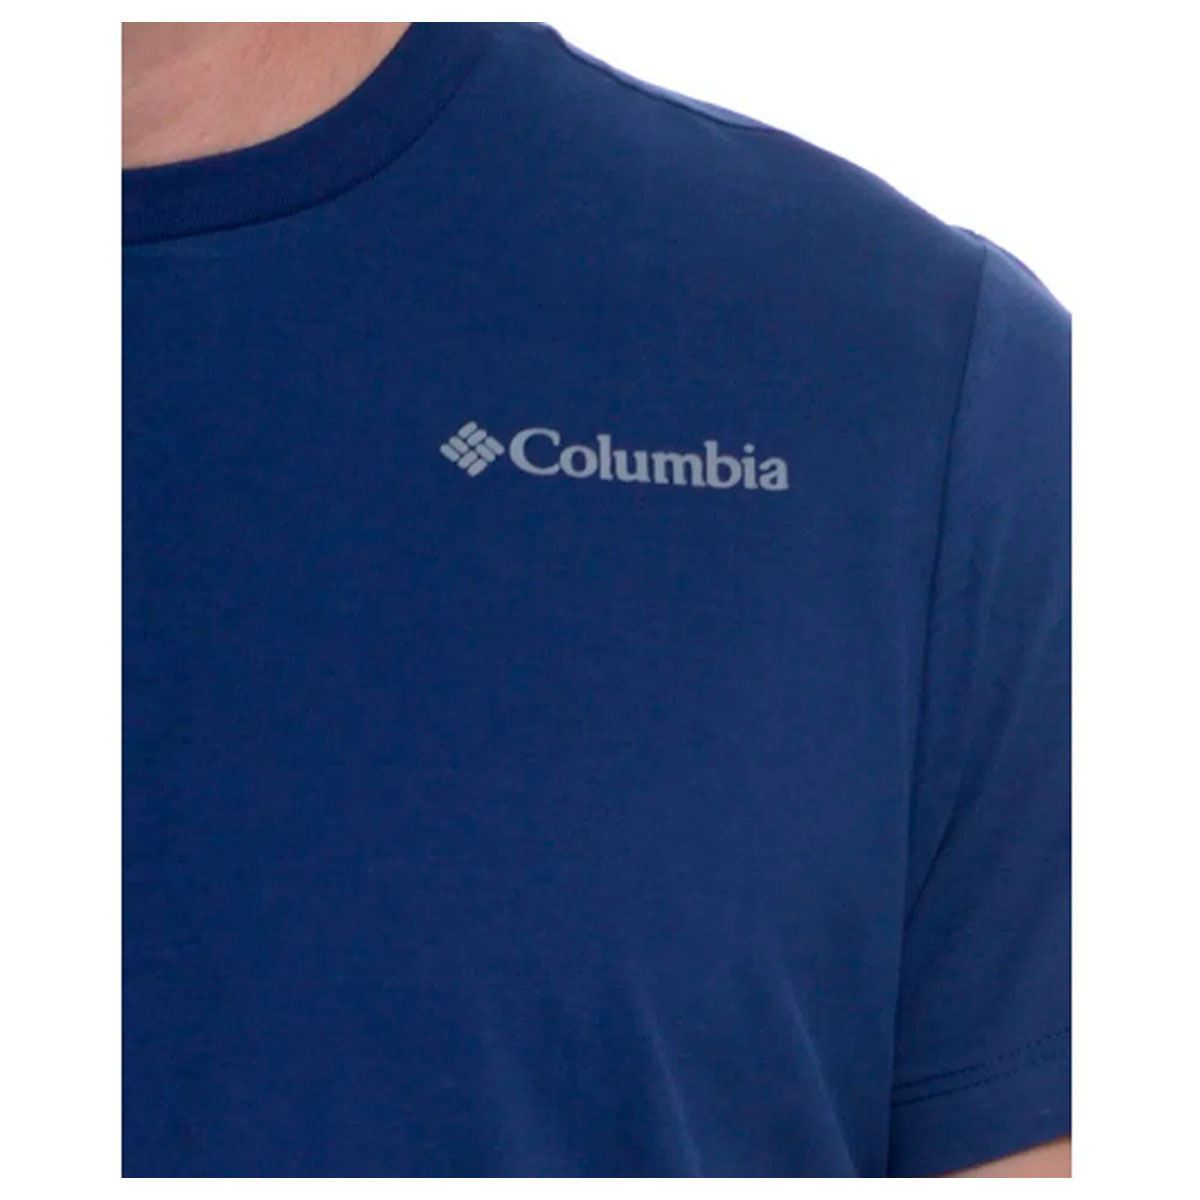 Camiseta Masculina Columbia Surf Blue